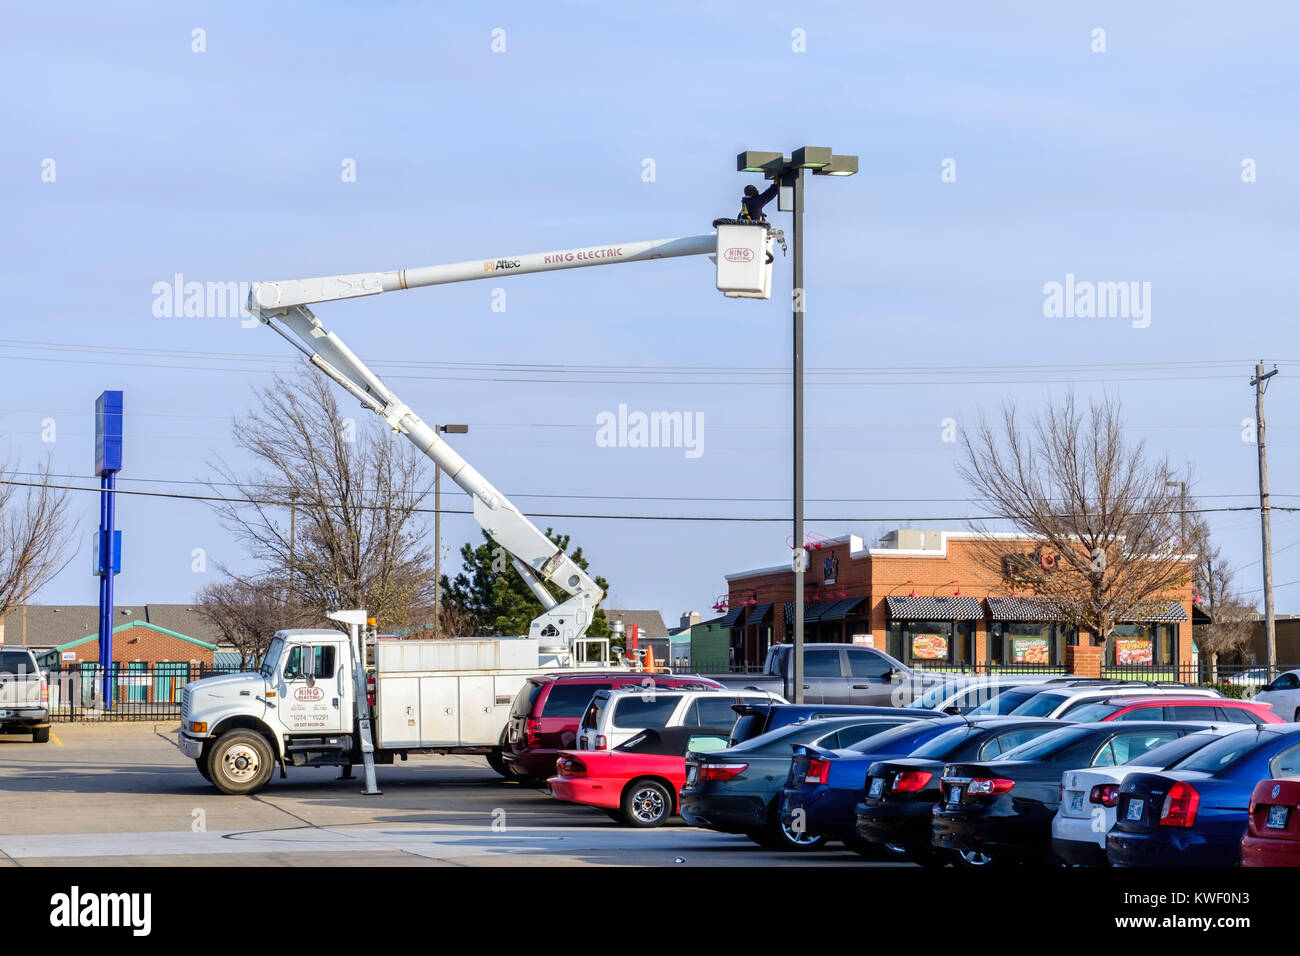 A workman in a lift bucket works on a shopping mall light fixture. Oklahoma City, Oklahoma, USA. Stock Photo